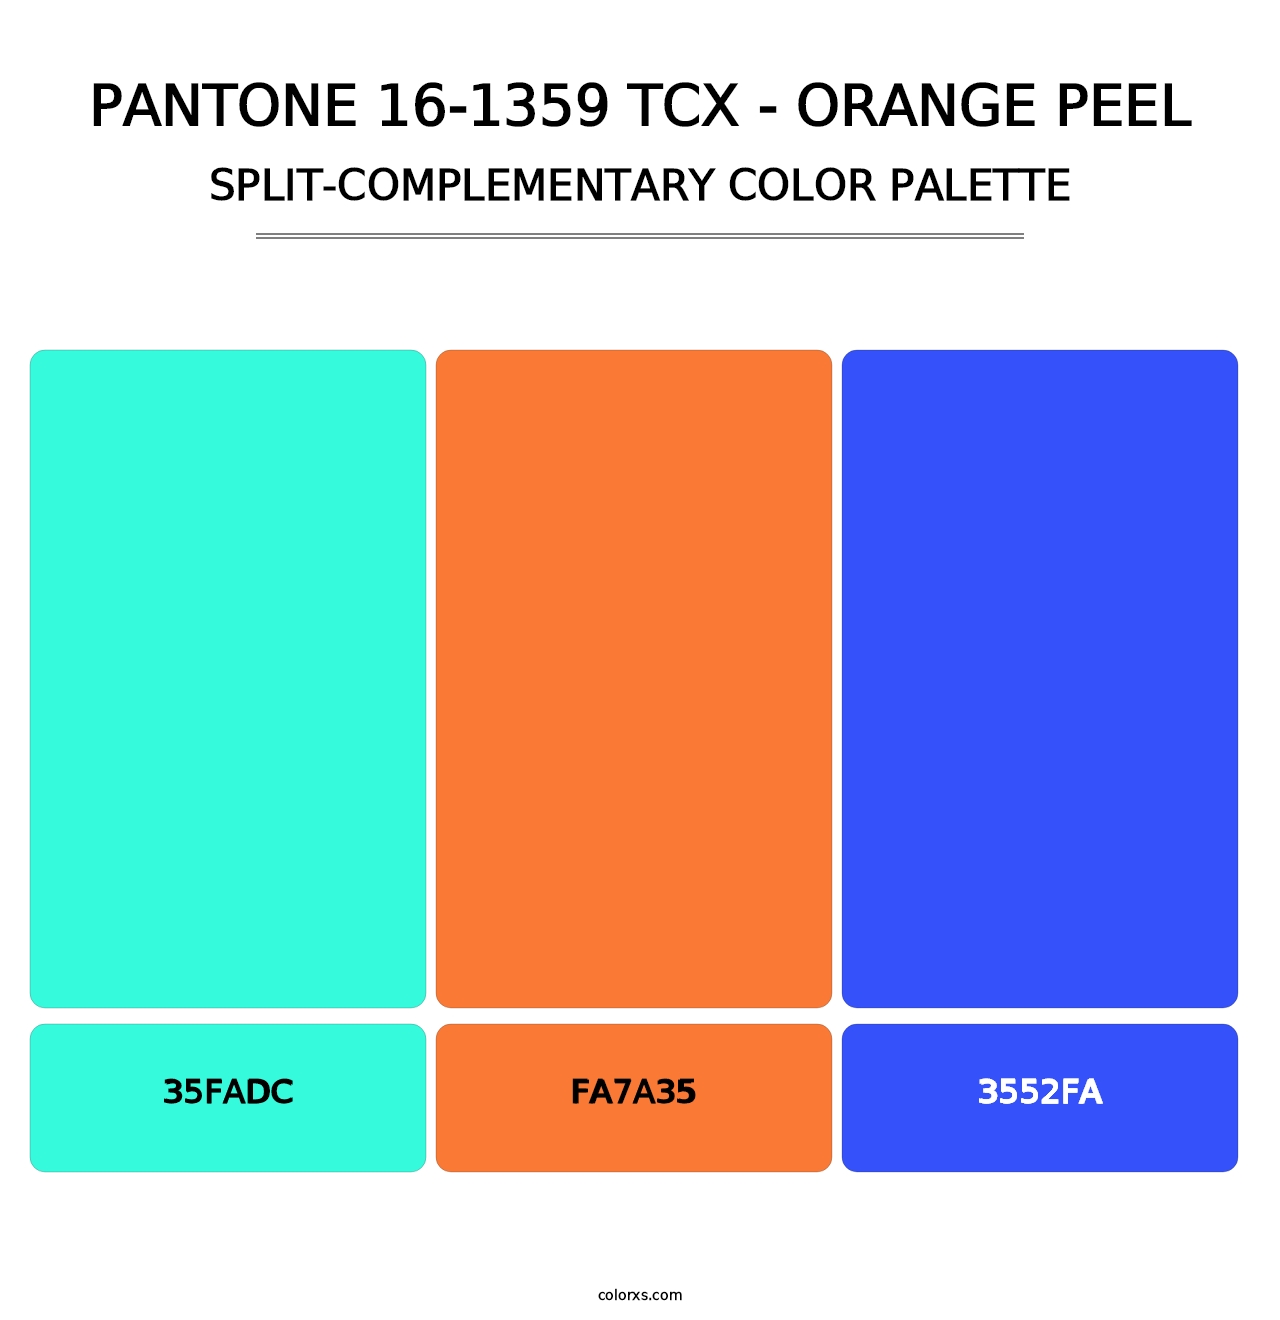 PANTONE 16-1359 TCX - Orange Peel - Split-Complementary Color Palette